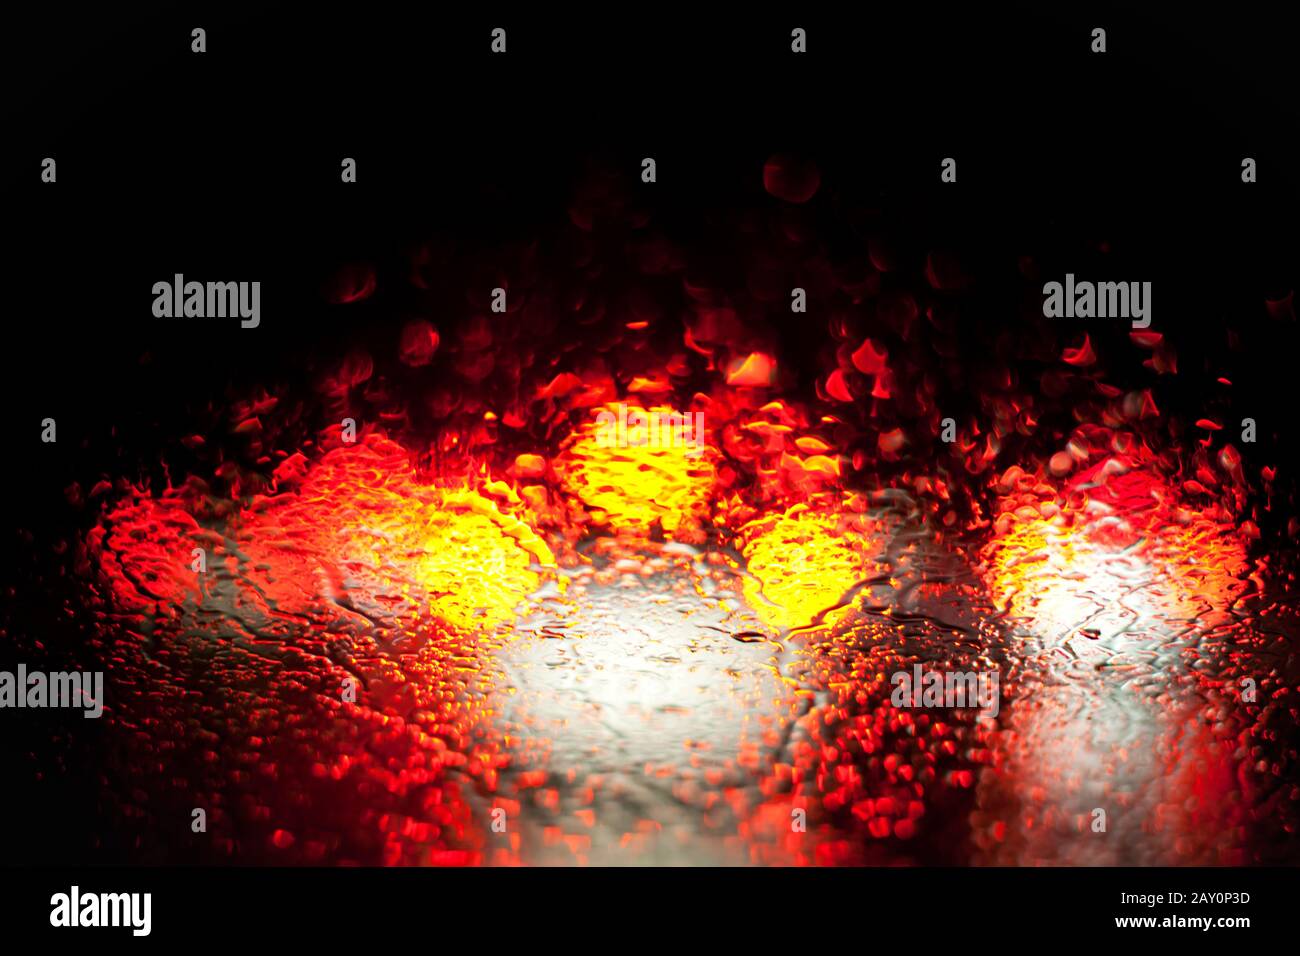 blurry RÃ¼cklichter in the rain Stock Photo